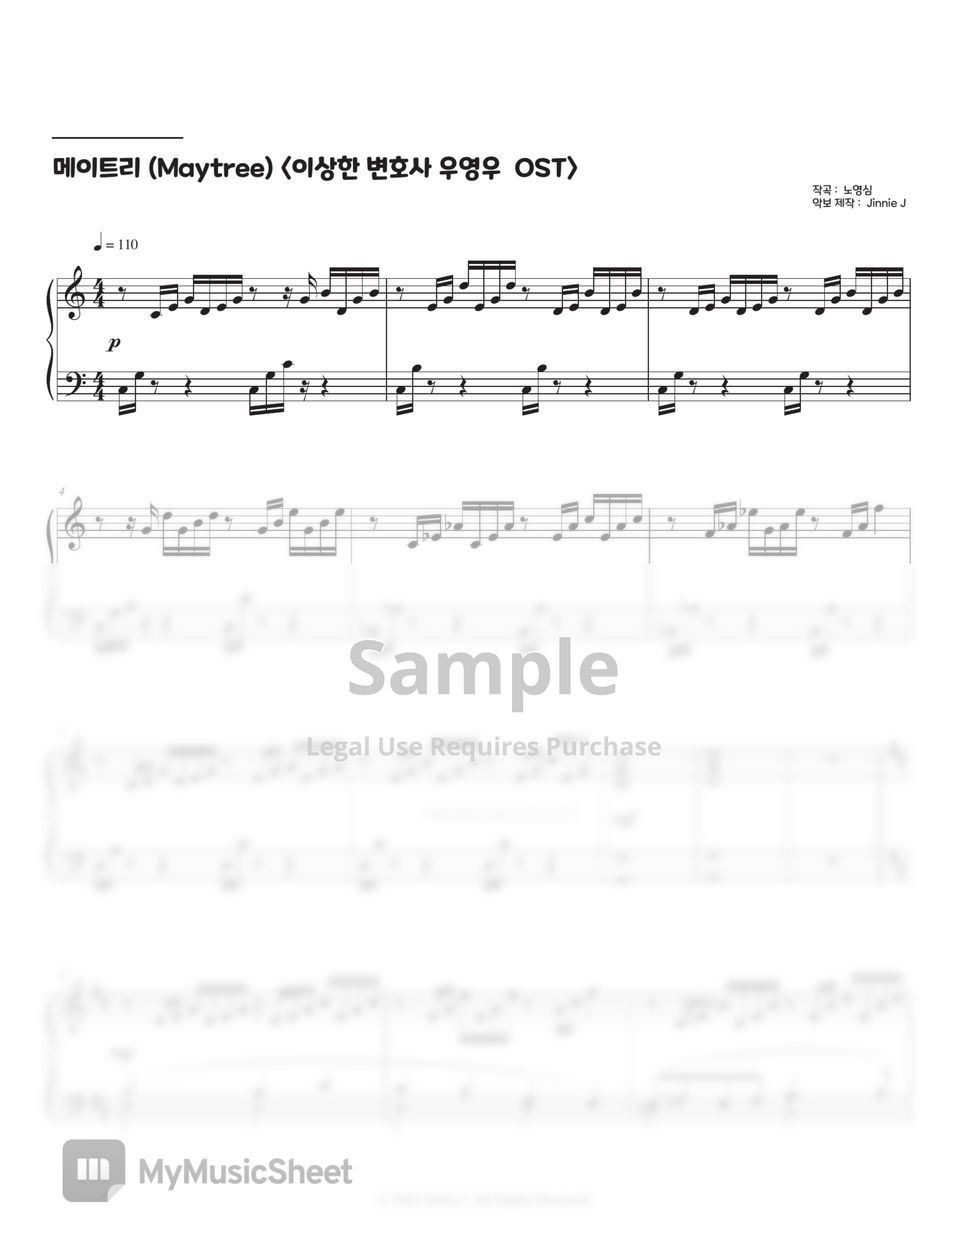 Maytree - Flash (Extraordinary Attorney Woo OST) by Jinnie J